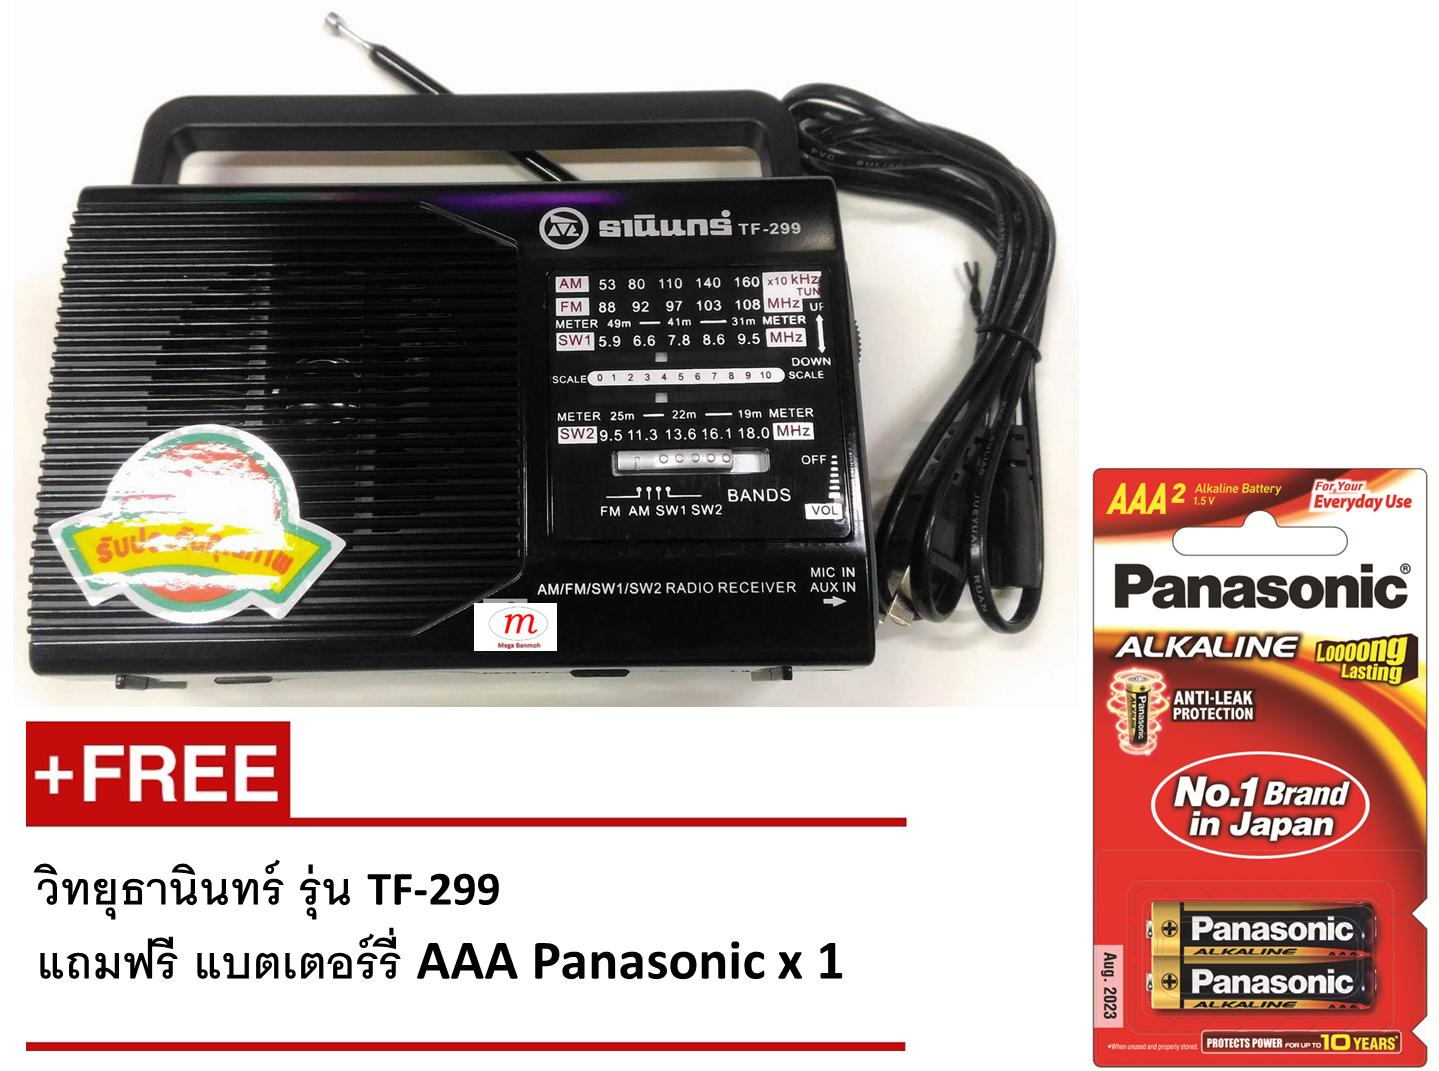 Tanin Radio (Made in Thailand) - Black วิทยุธานินทร์ รุ่นเล็ก TF-299 Free AAA Panasonic Battery